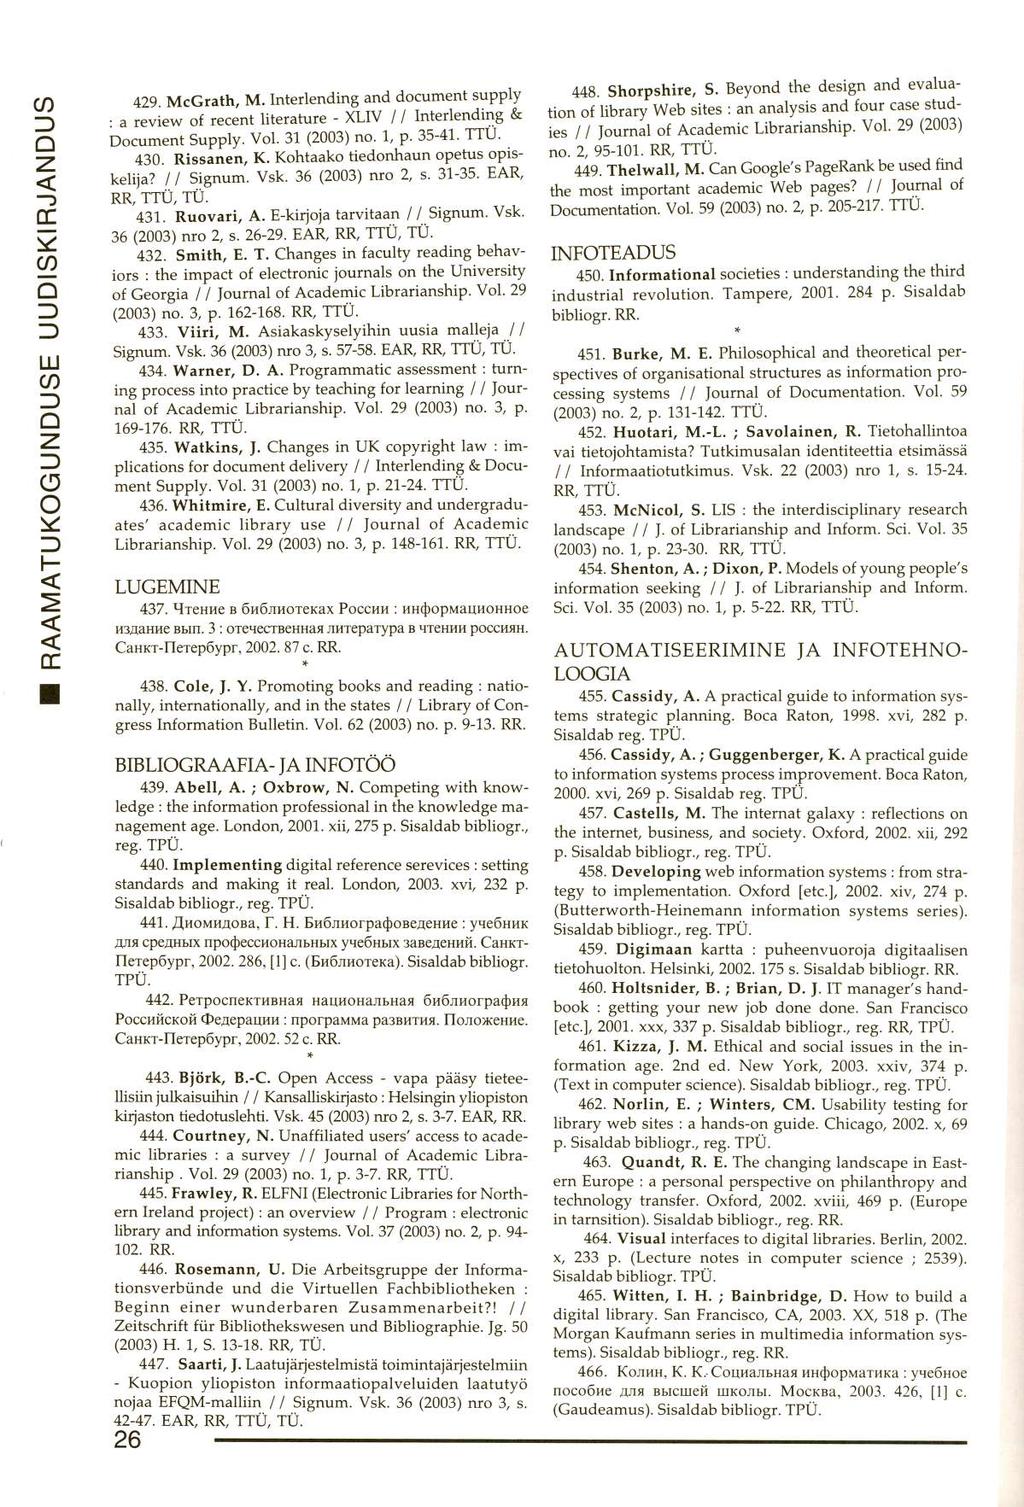 RAAMATUKOGUNDUSE UUDISKIRJANDUS 429. McGrath, M. Interlending and document supply : a review of recent literature - XLIV / / Interlending & Document Supply. Vol. 31 (2003) no. 1, p. 35-41. TTÜ. 430.